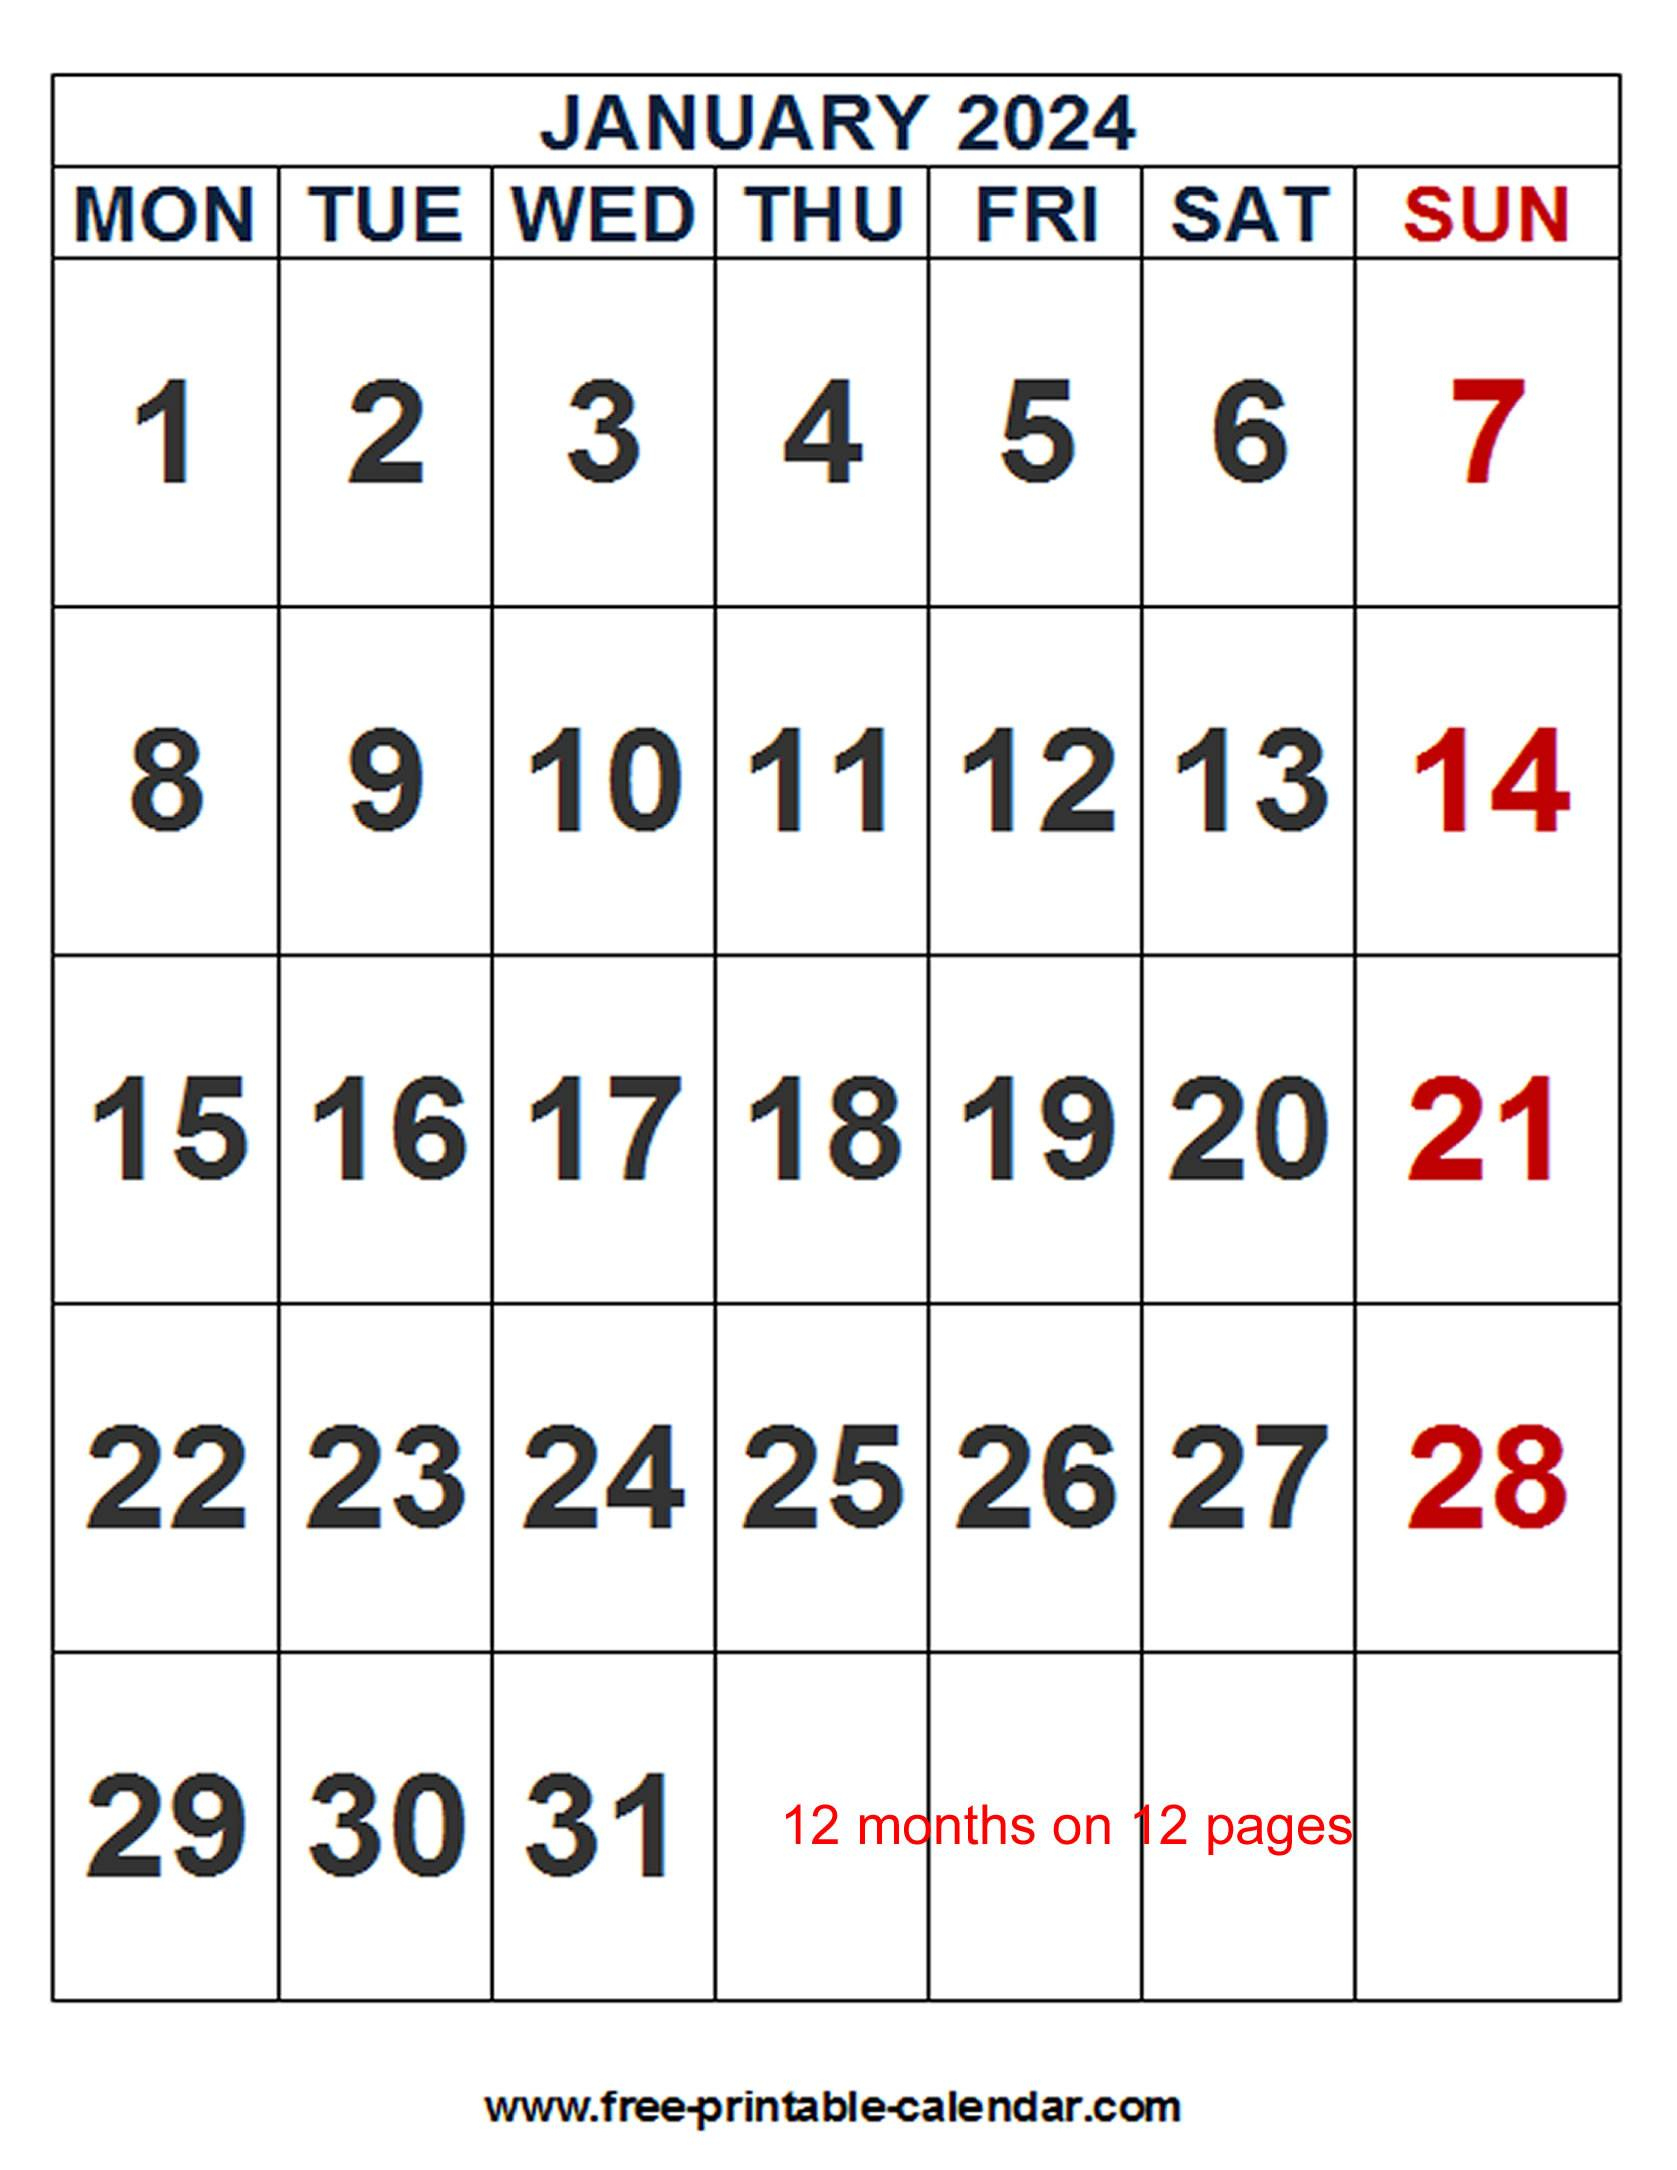 2024 Calendar Word Template - Free-Printable-Calendar | Printable Calendar 2024 Free Word